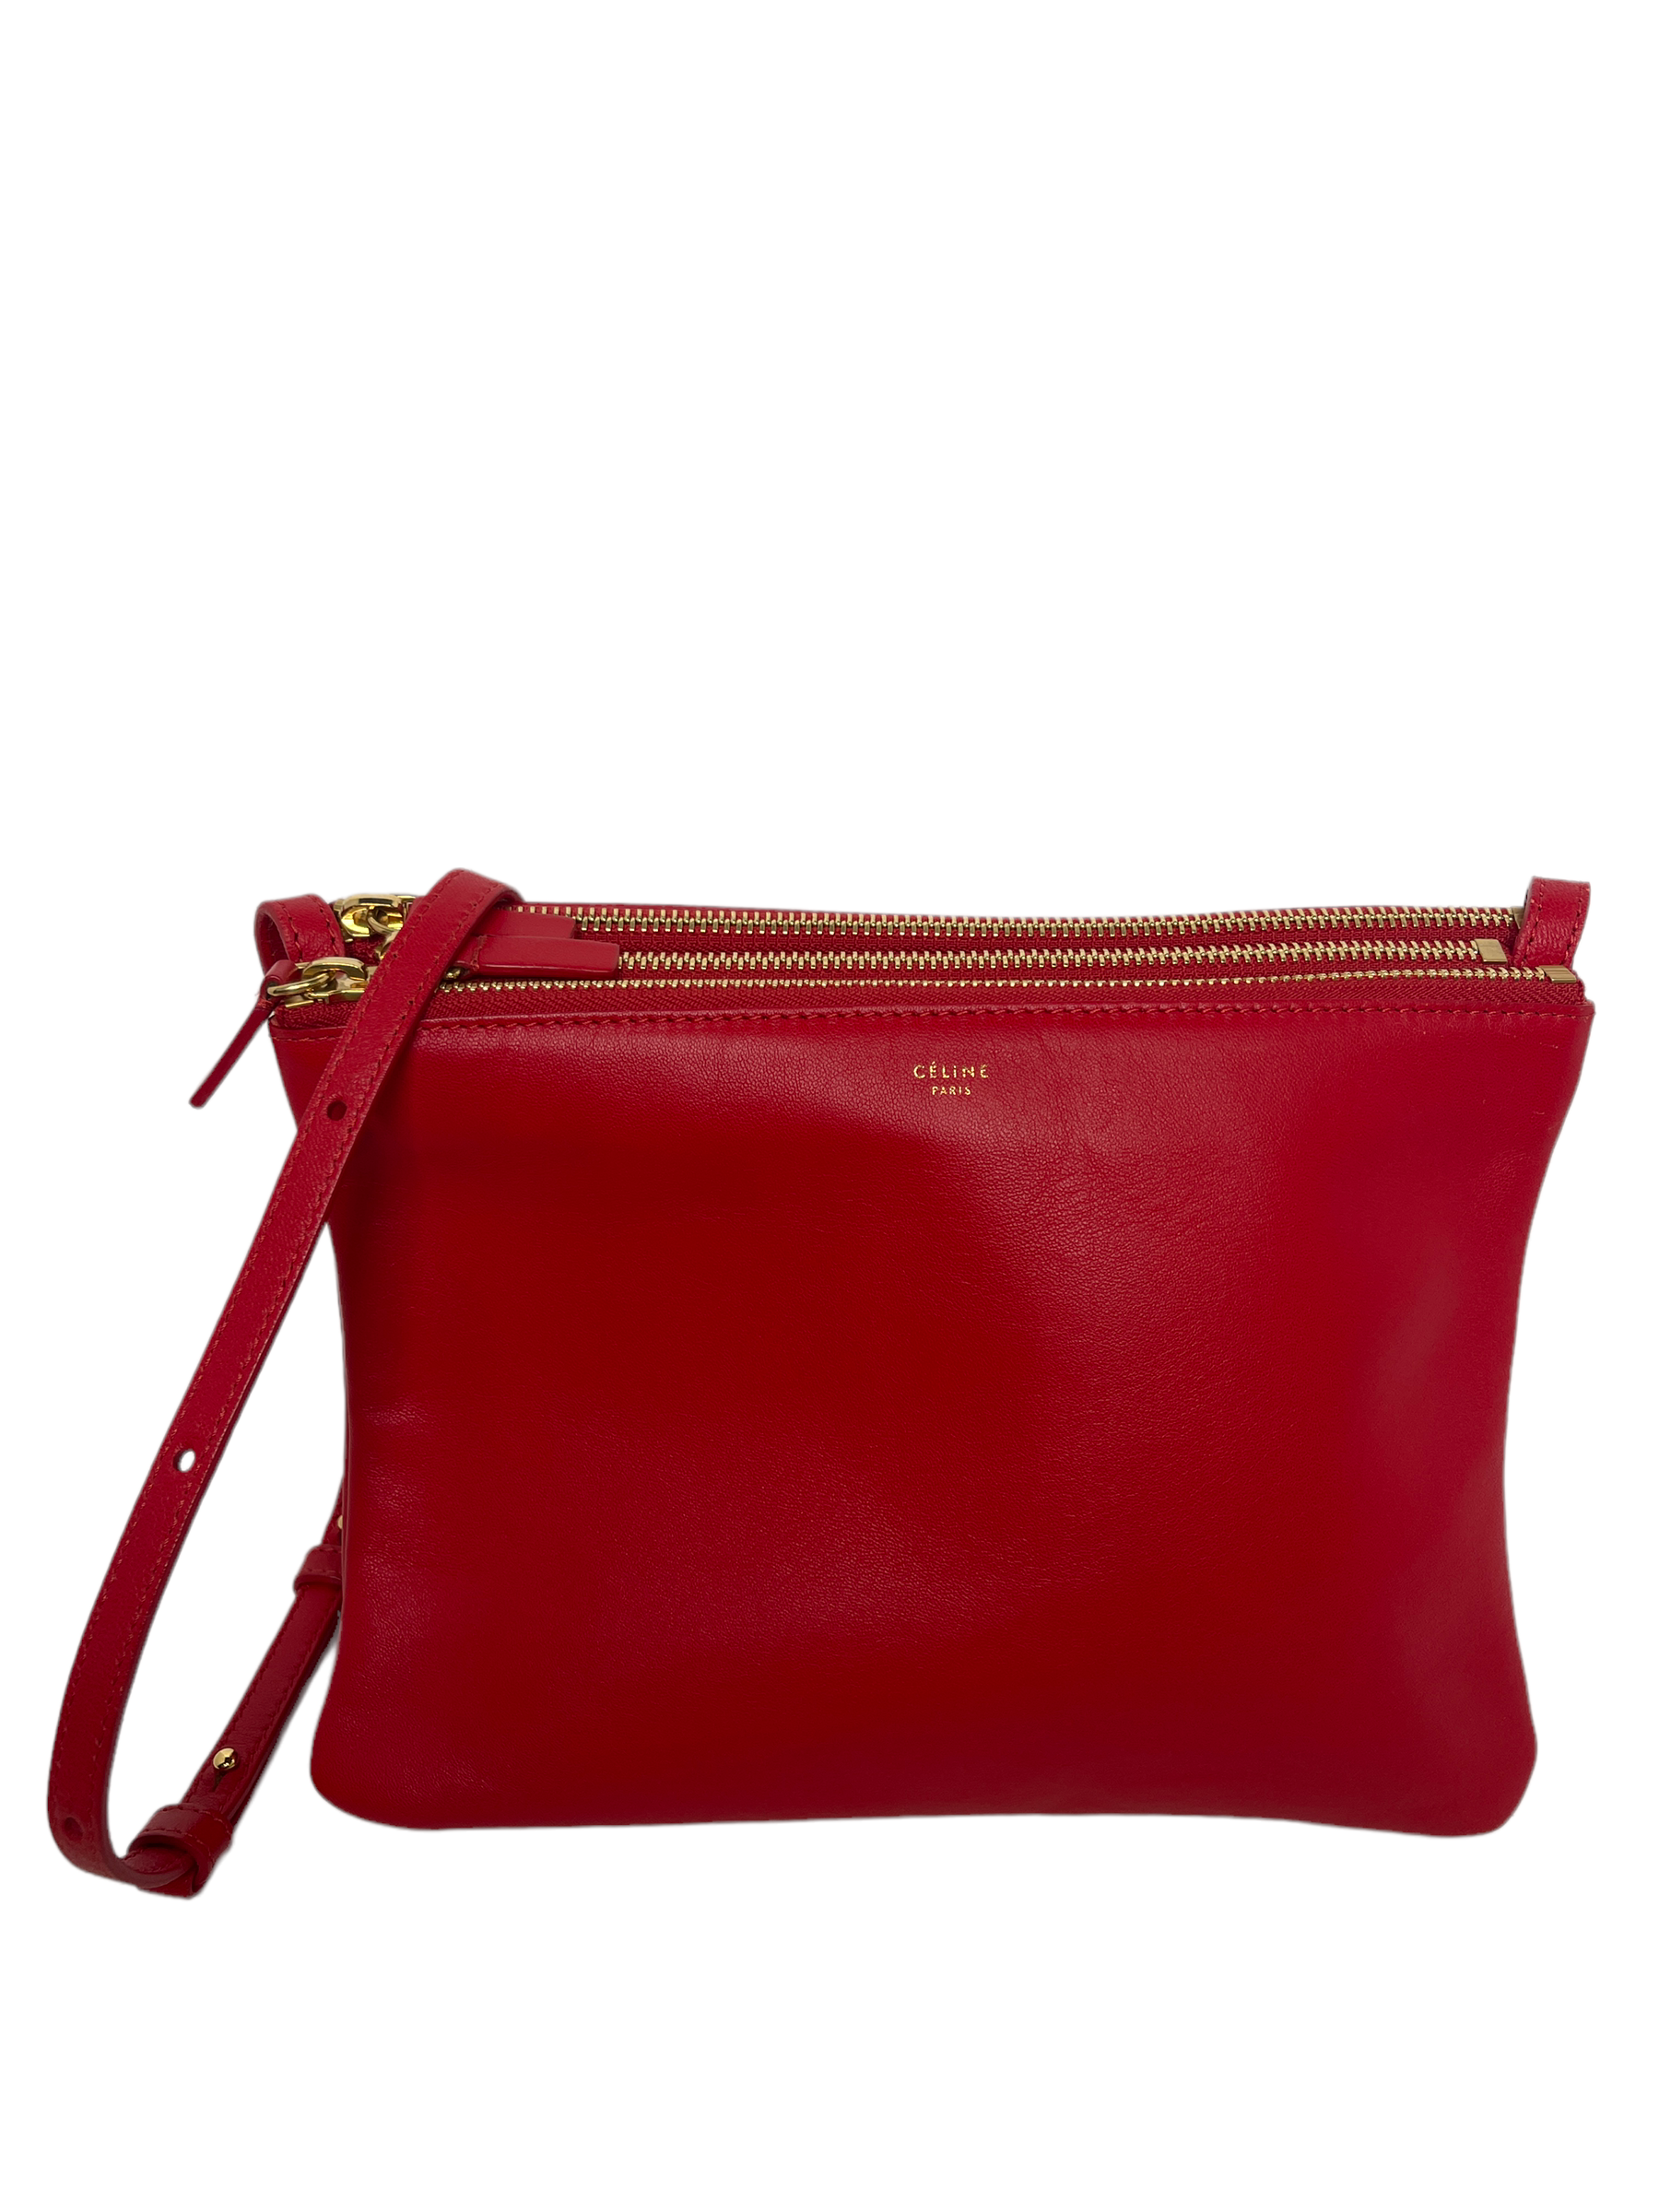 ↘️New Price↘️ Celine Trio Crossbody Bag-Red Leather Type